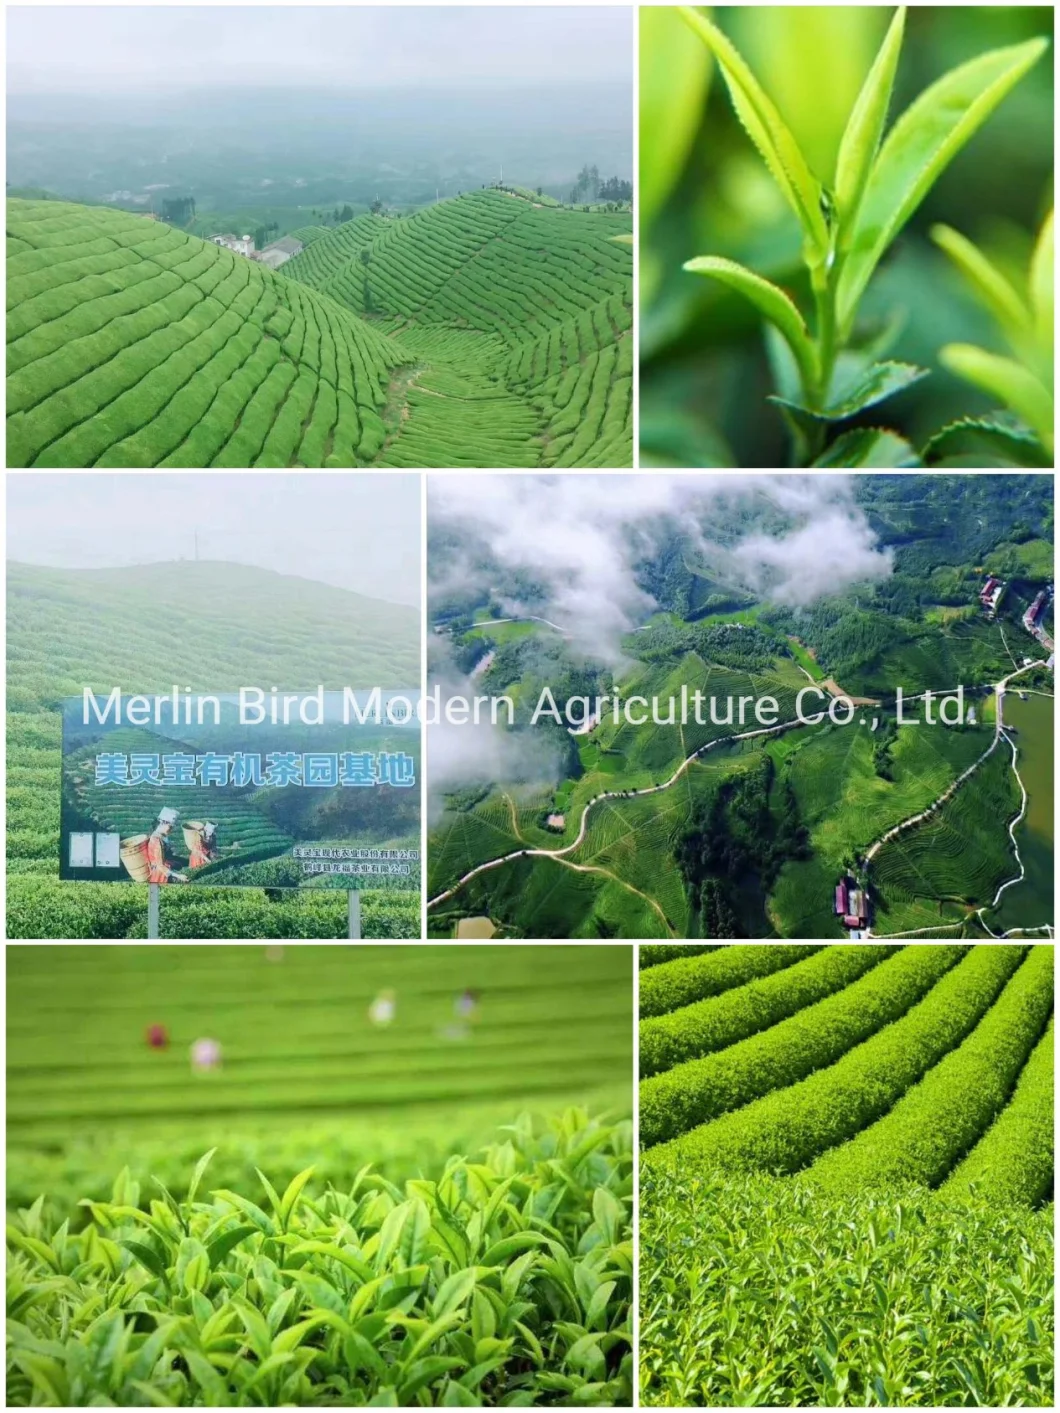 Chinese Herbal Tea White Peach Dried Apple Oolong Tea Fruit Tea